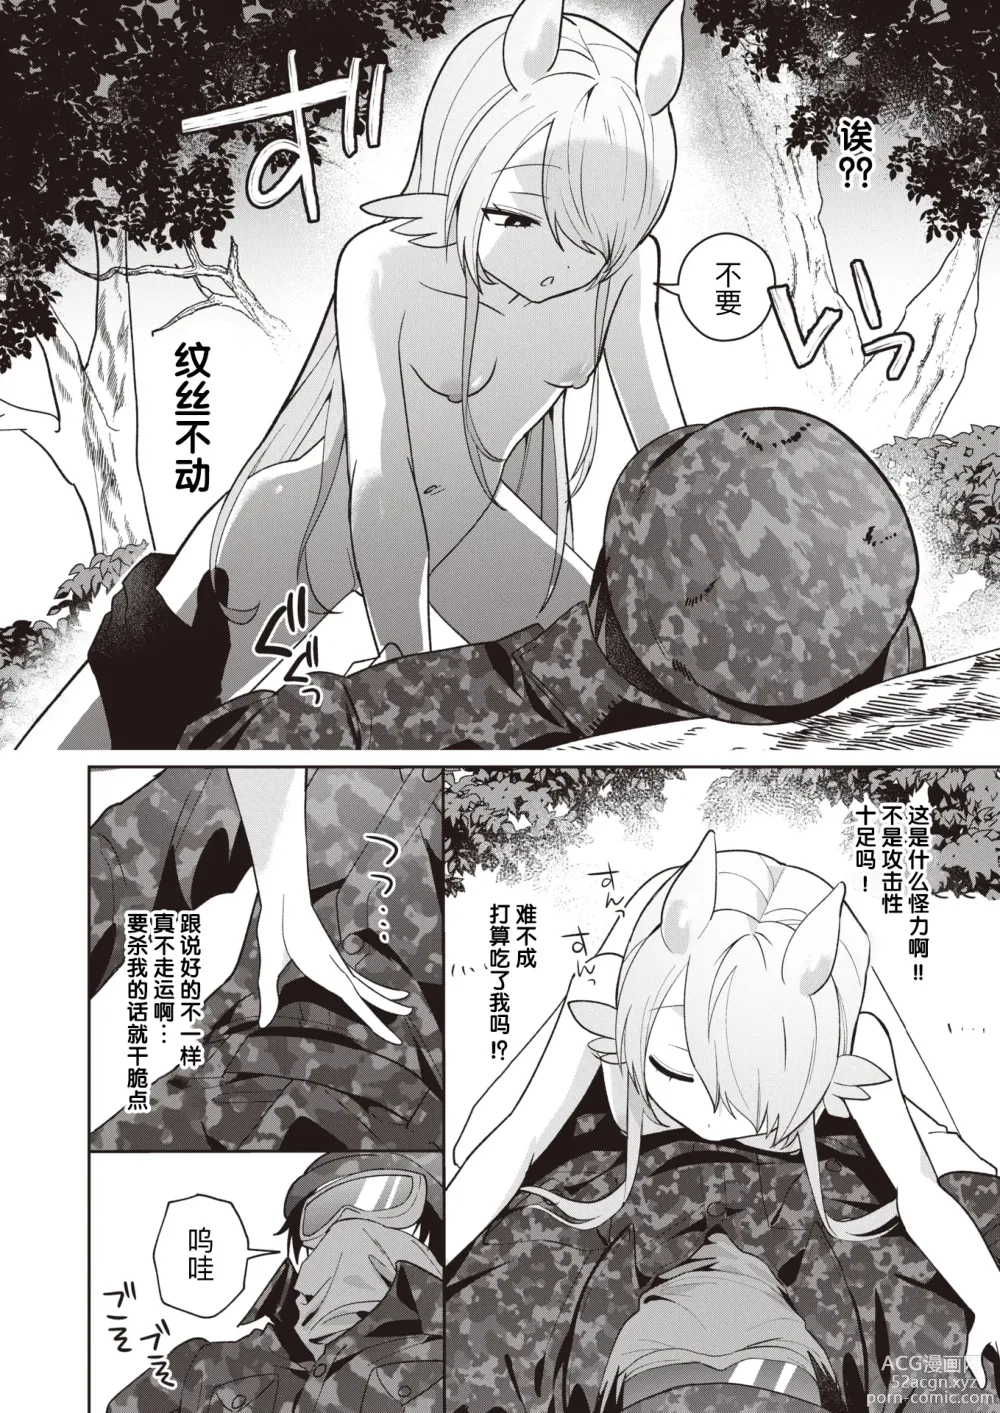 Page 4 of manga Kimera Shoujo ga Hoshii Mono - WHAT THE CHIMERA GIRLWANTS